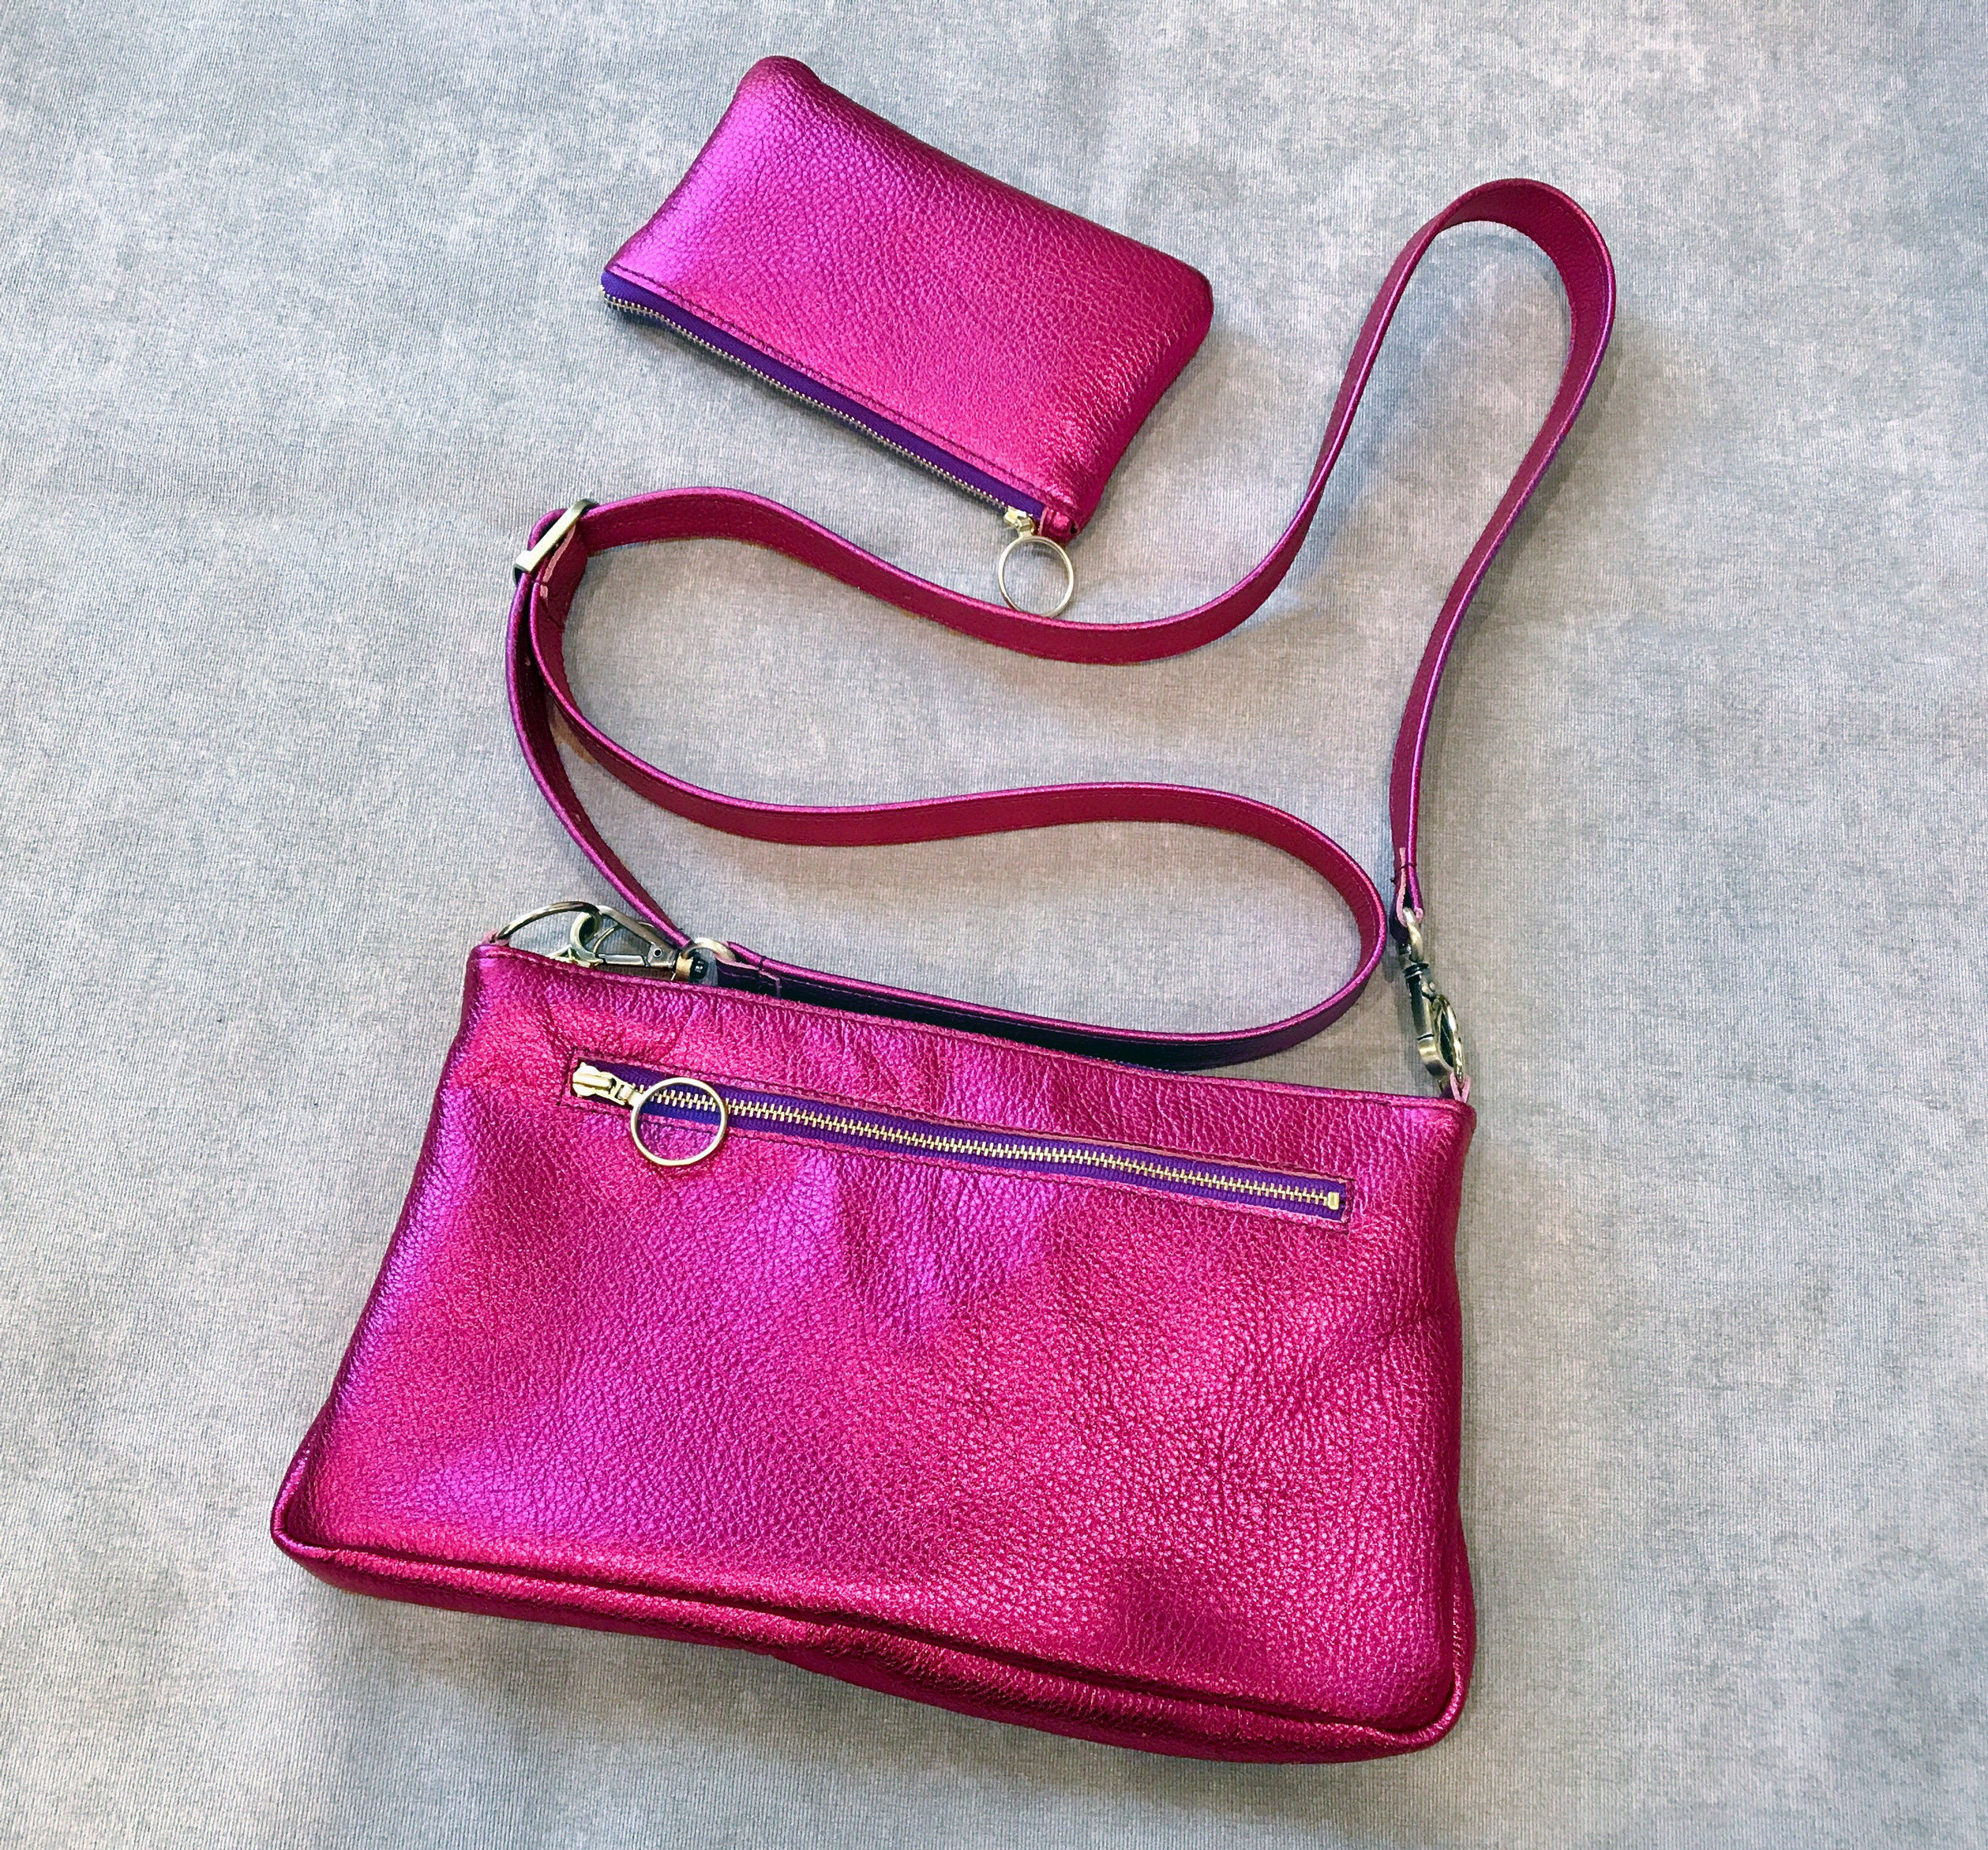 Beijo pink mod purse - Gem